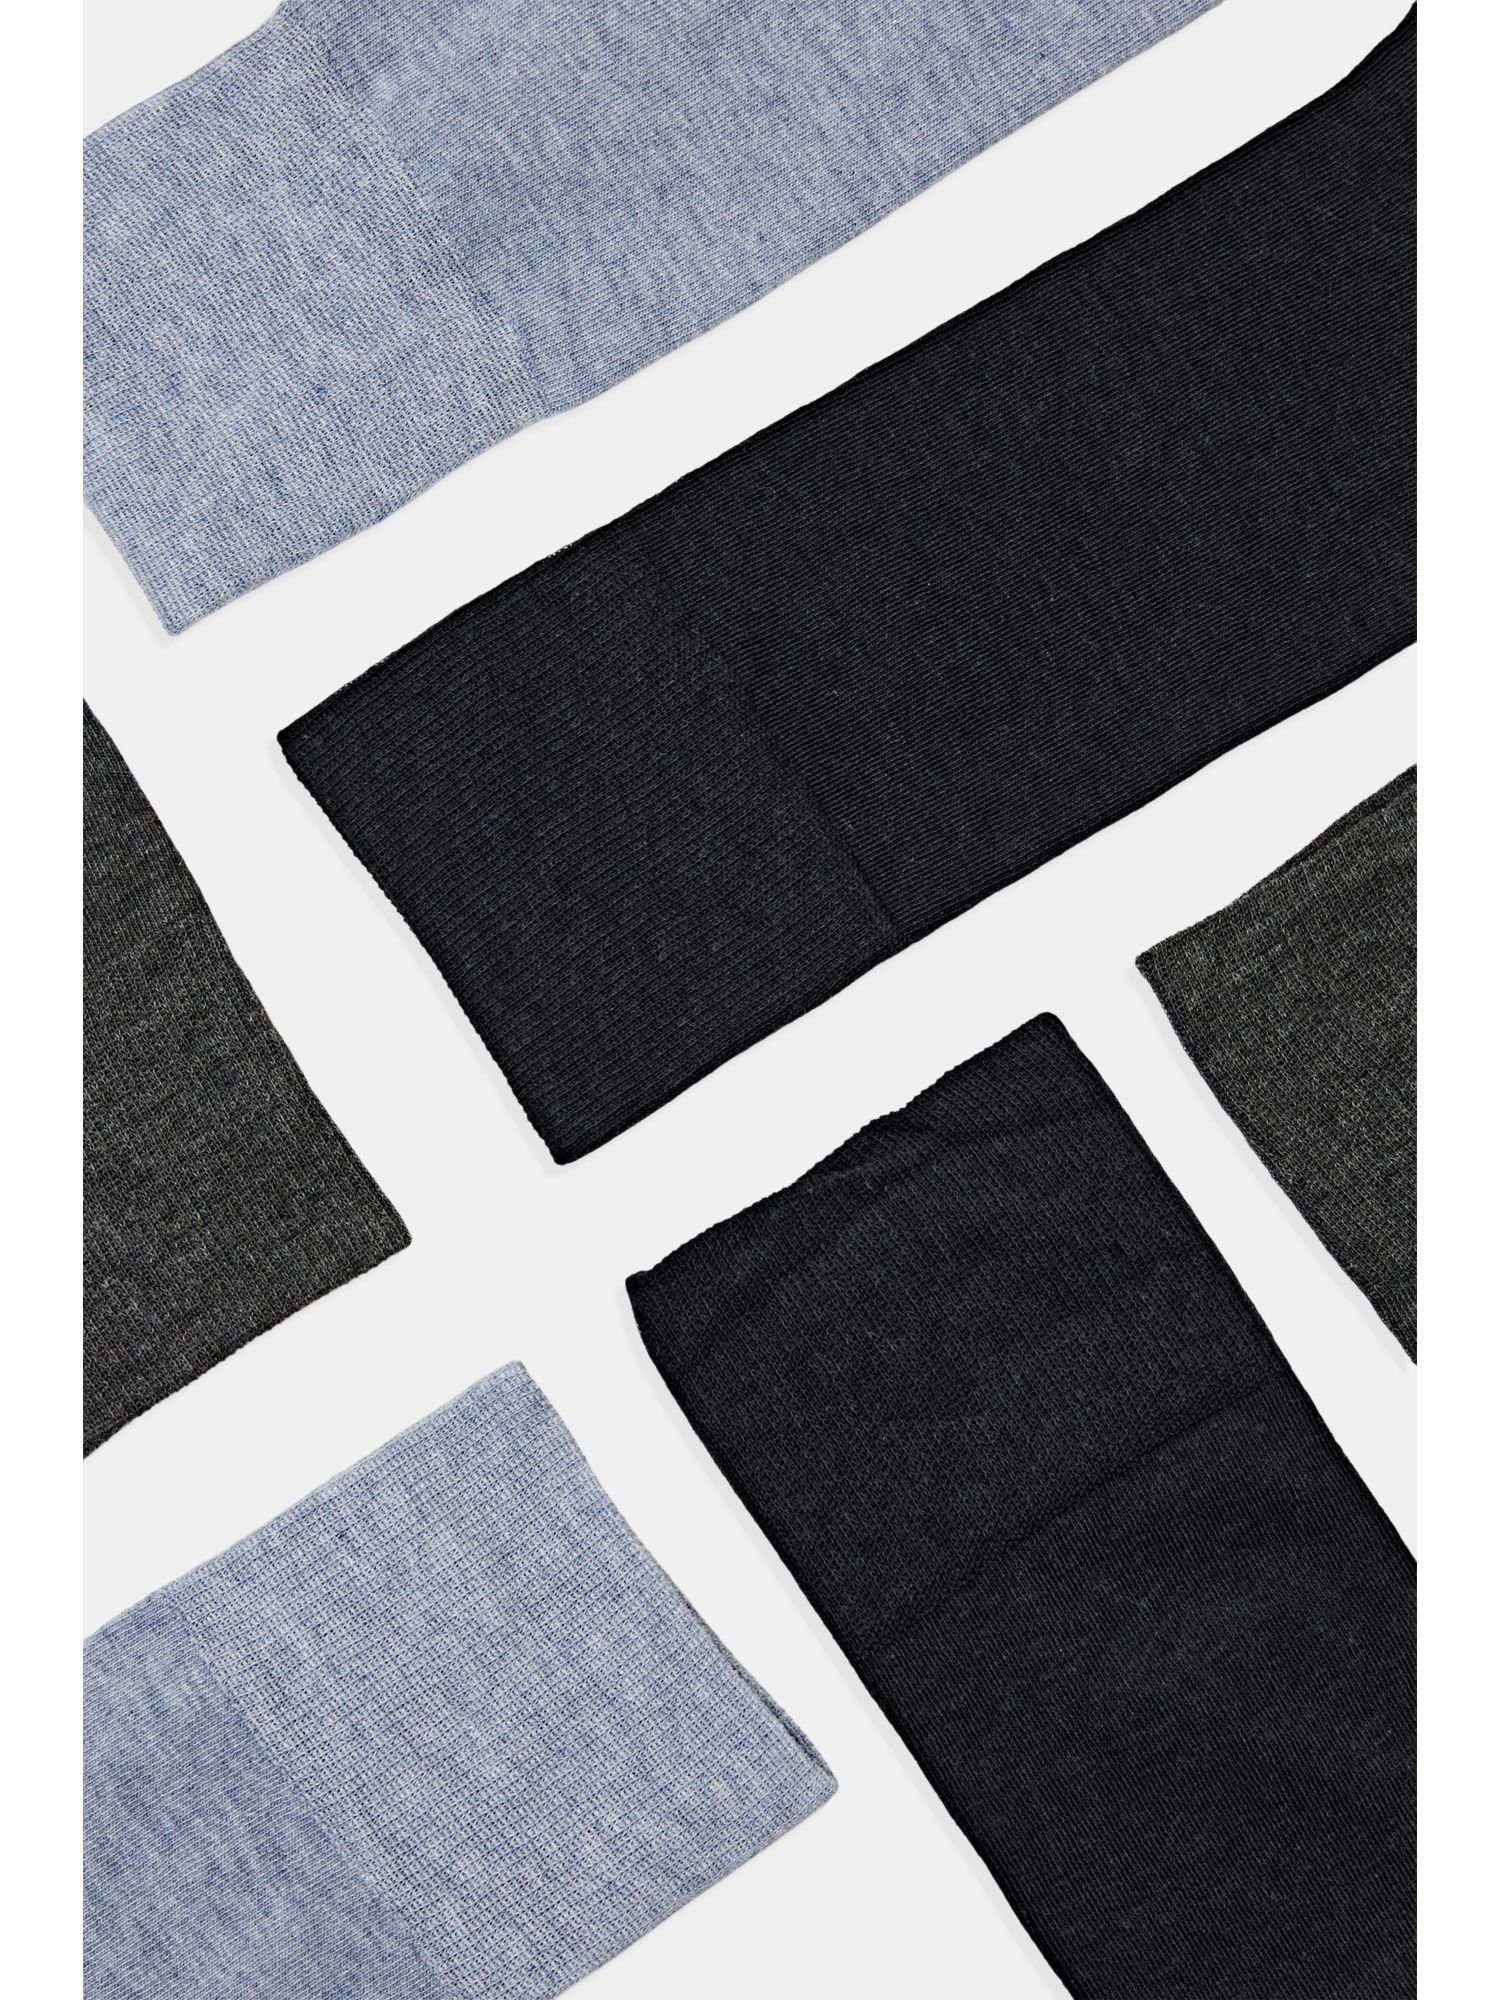 Socken Socken 3er Geschenkbox in BLACK/BLUE Set Esprit